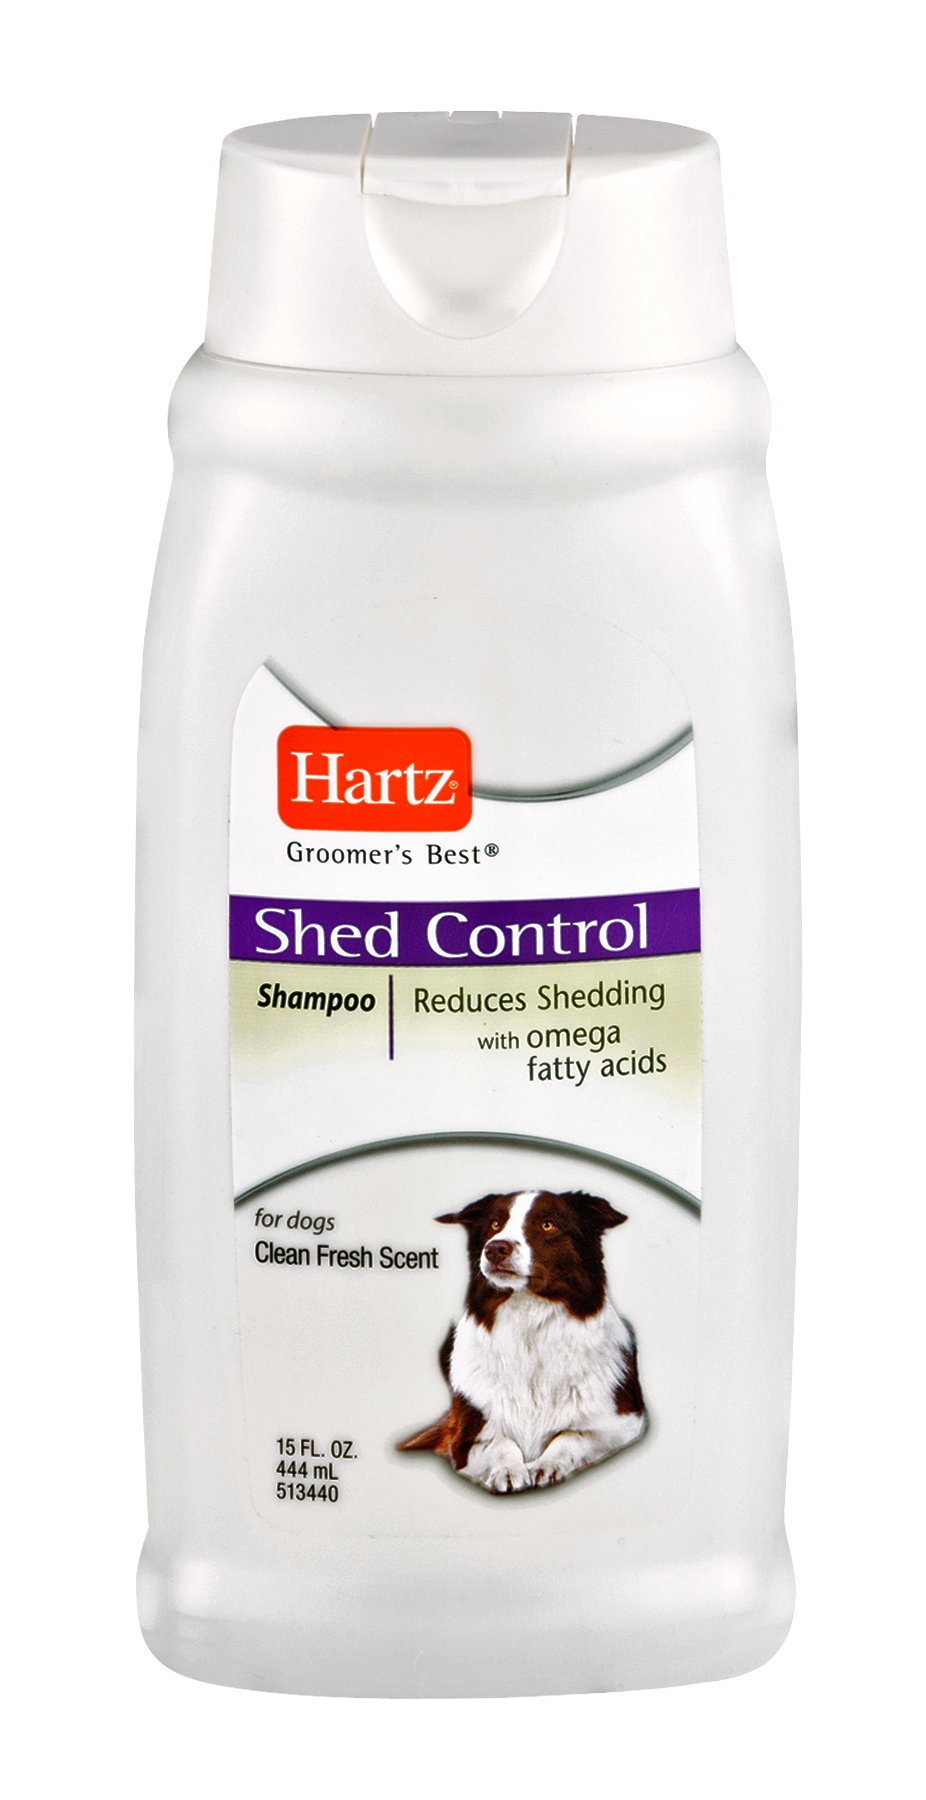 Hartz Ultra Guard Pro Flea & Tick Shampoo for Dogs - Shop Grooming at H-E-B